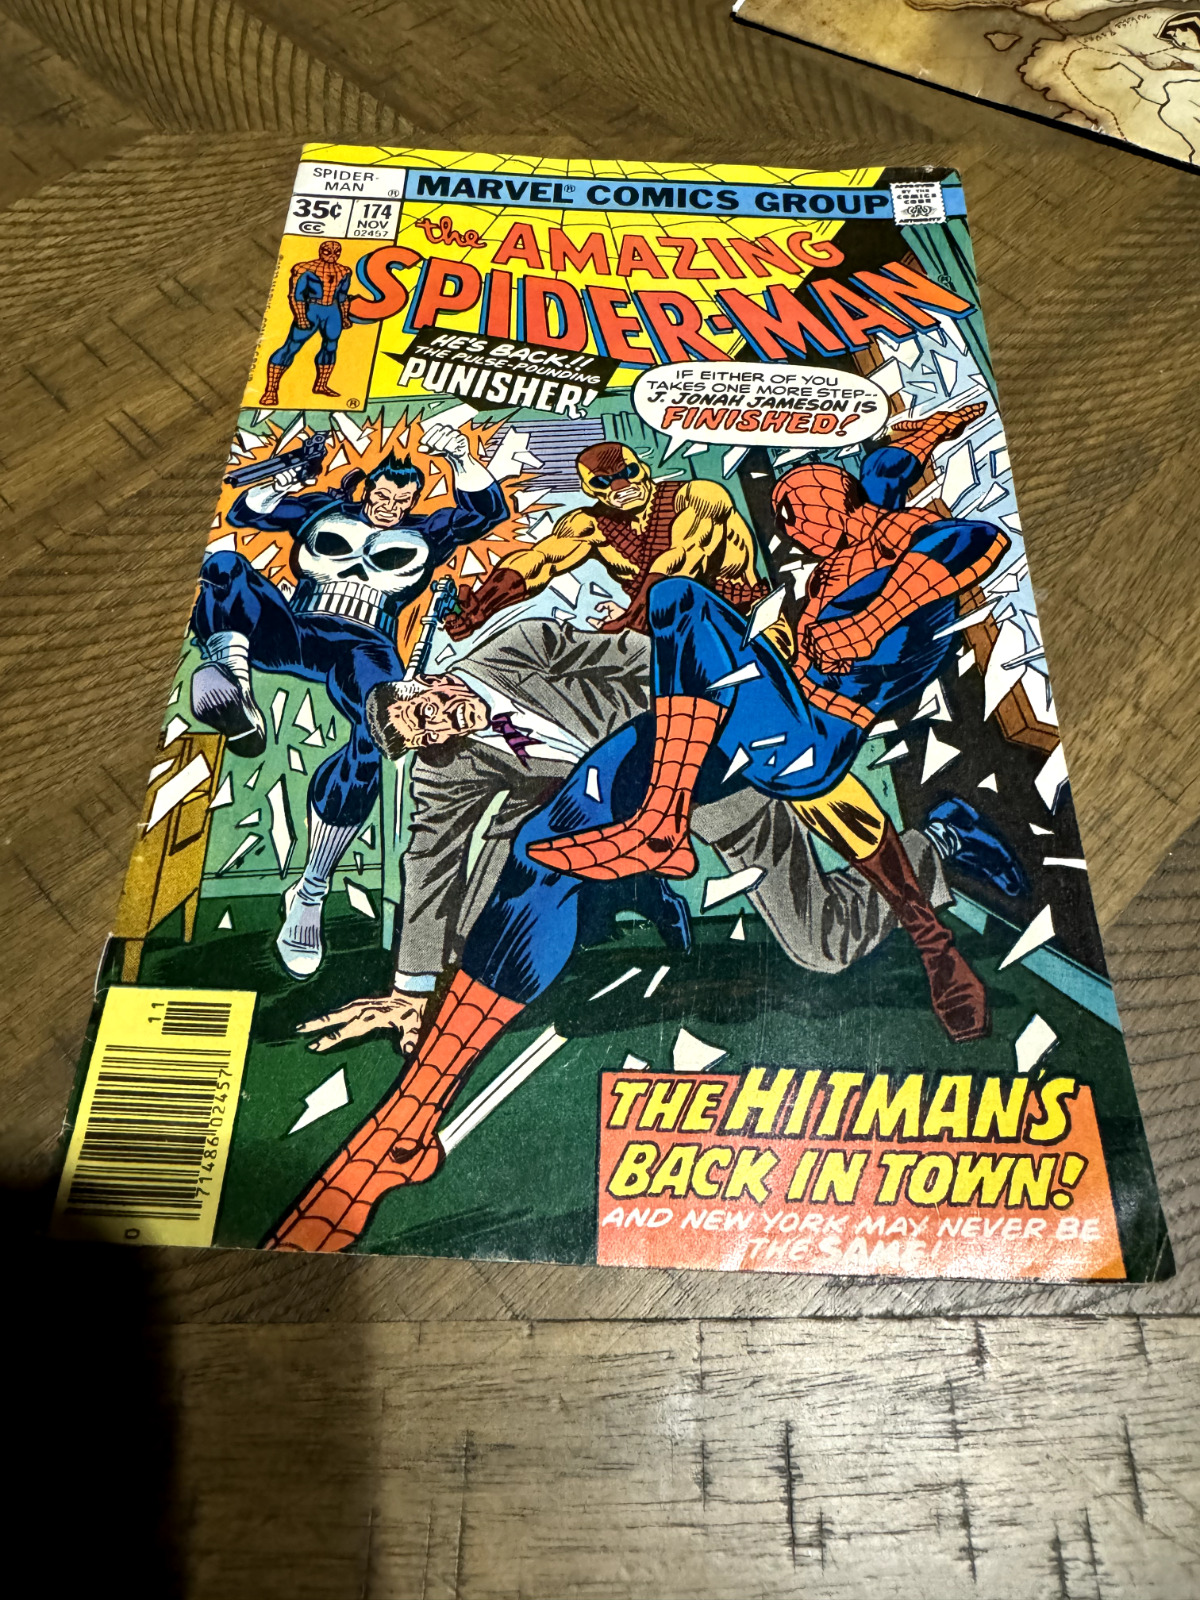 The Amazing Spider-Man #174 - Return of The Hitman/Punisher (Marvel 1977)